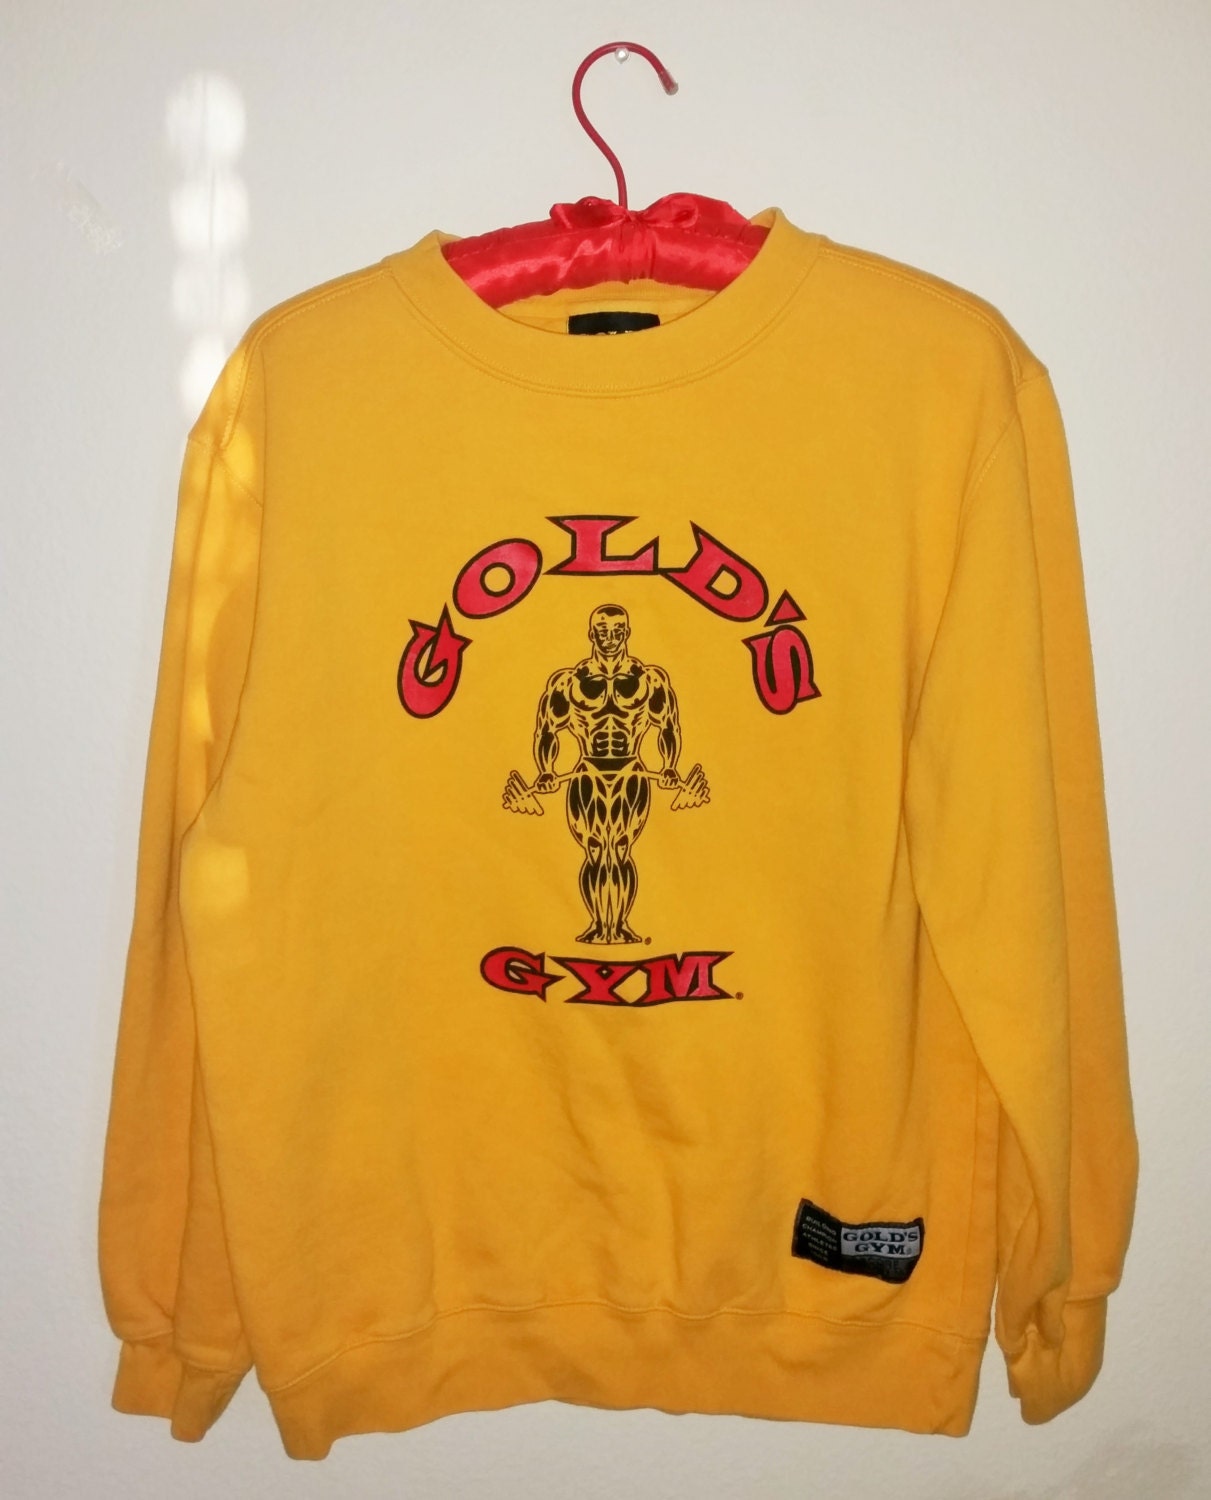 90s Vintage Golds Gym Sweatshirt Mens Small